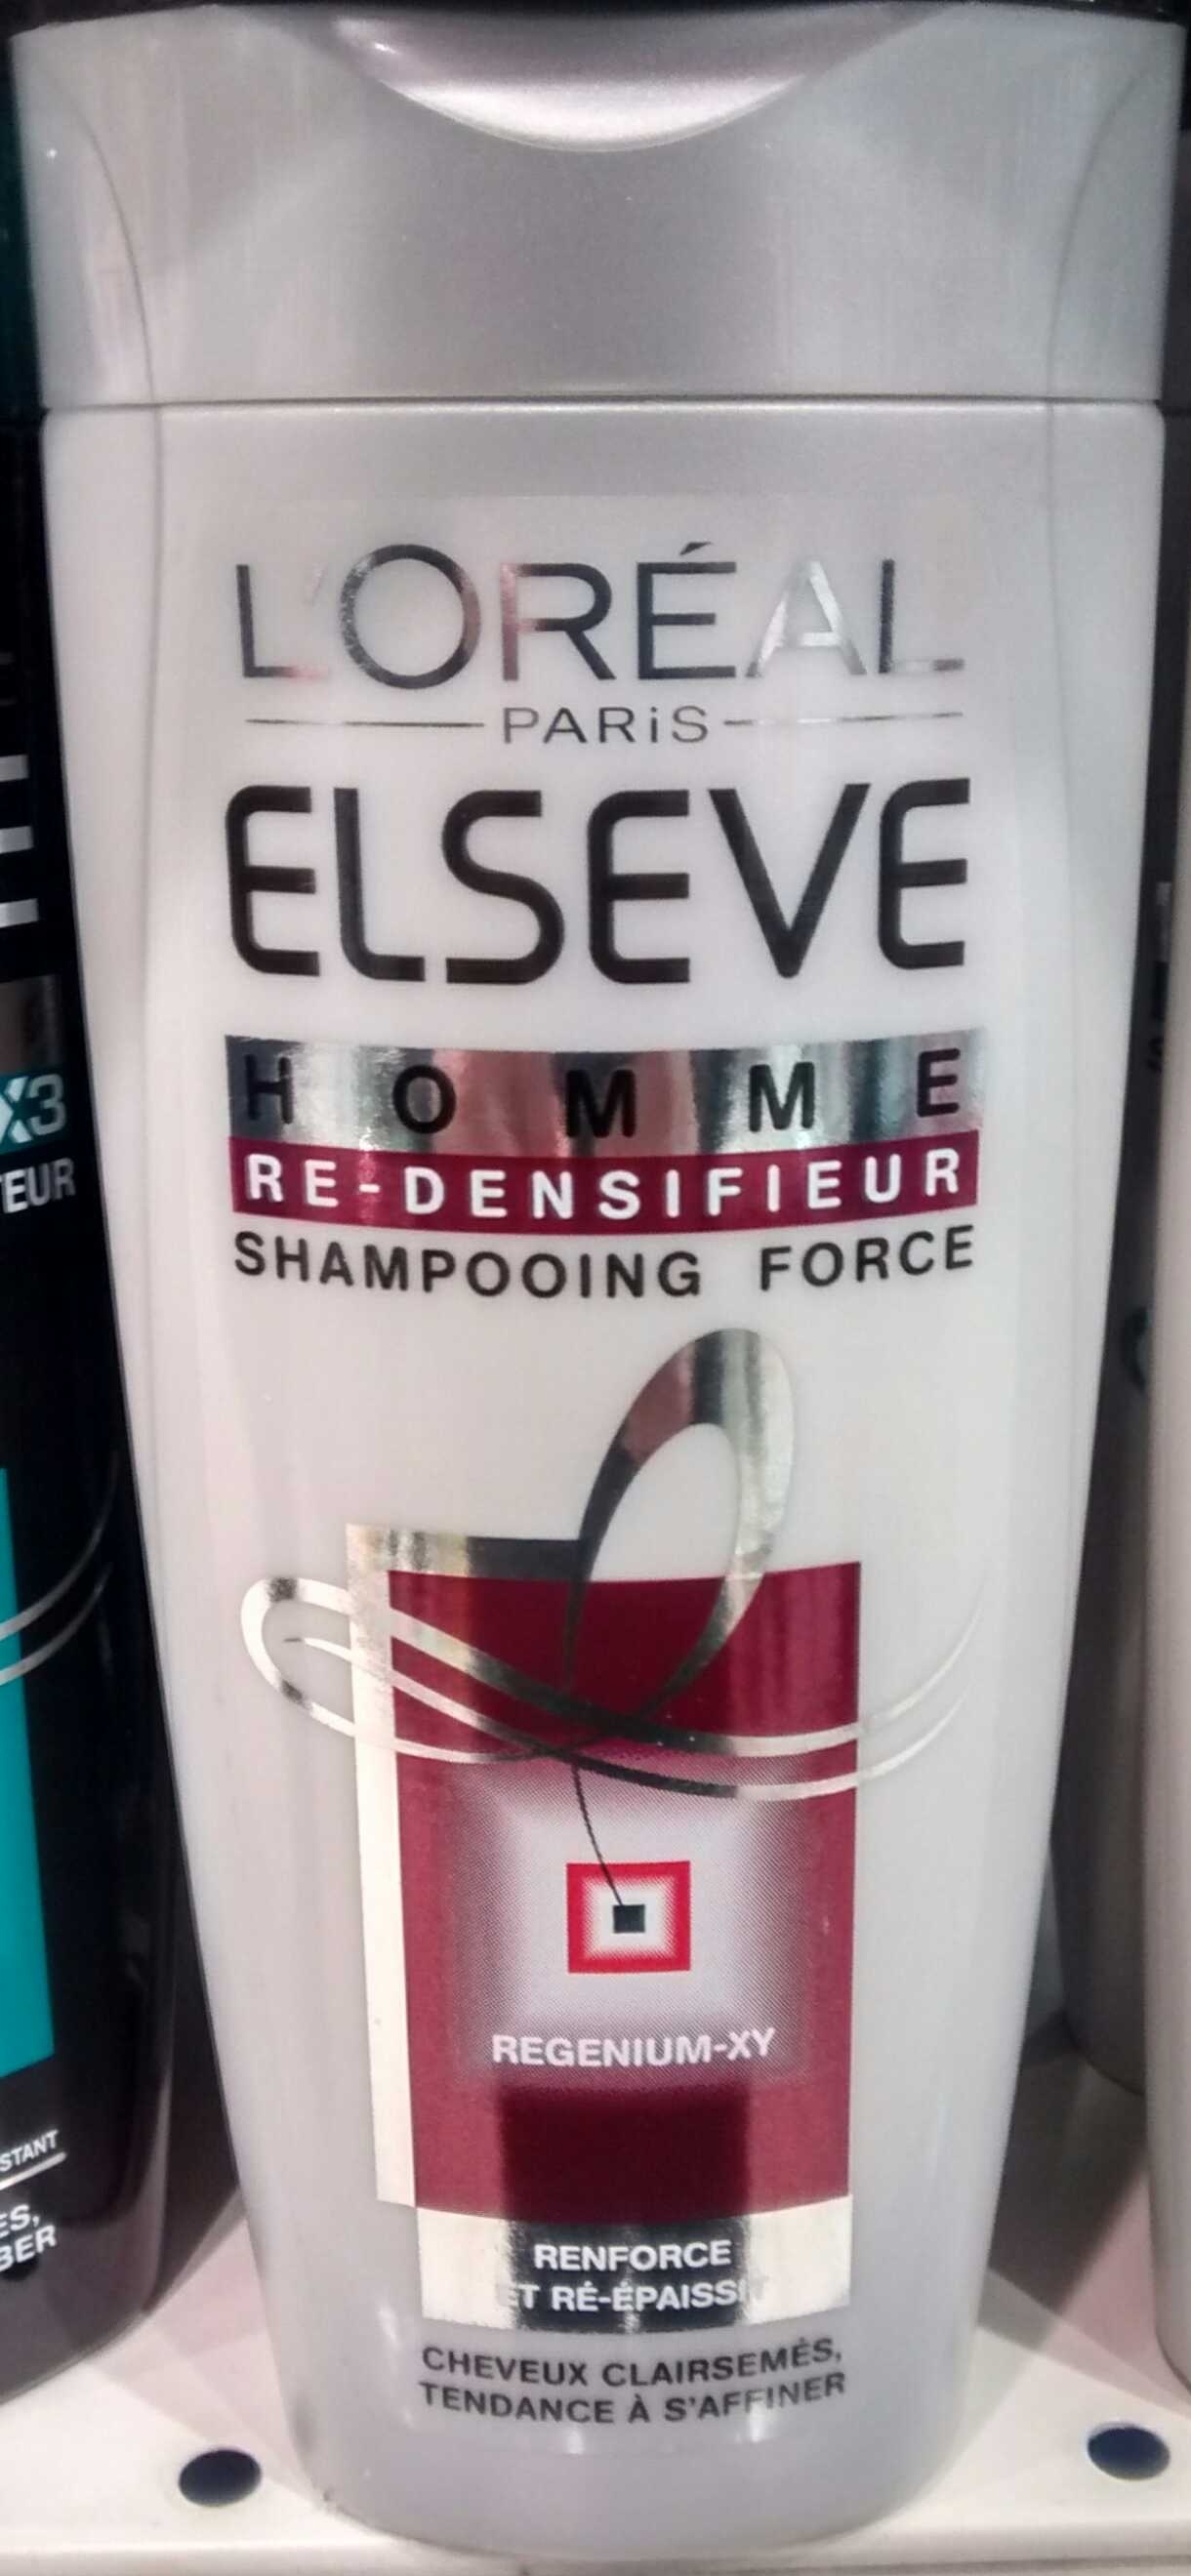 Re-densifieur shampooing force Homme - Produit - fr